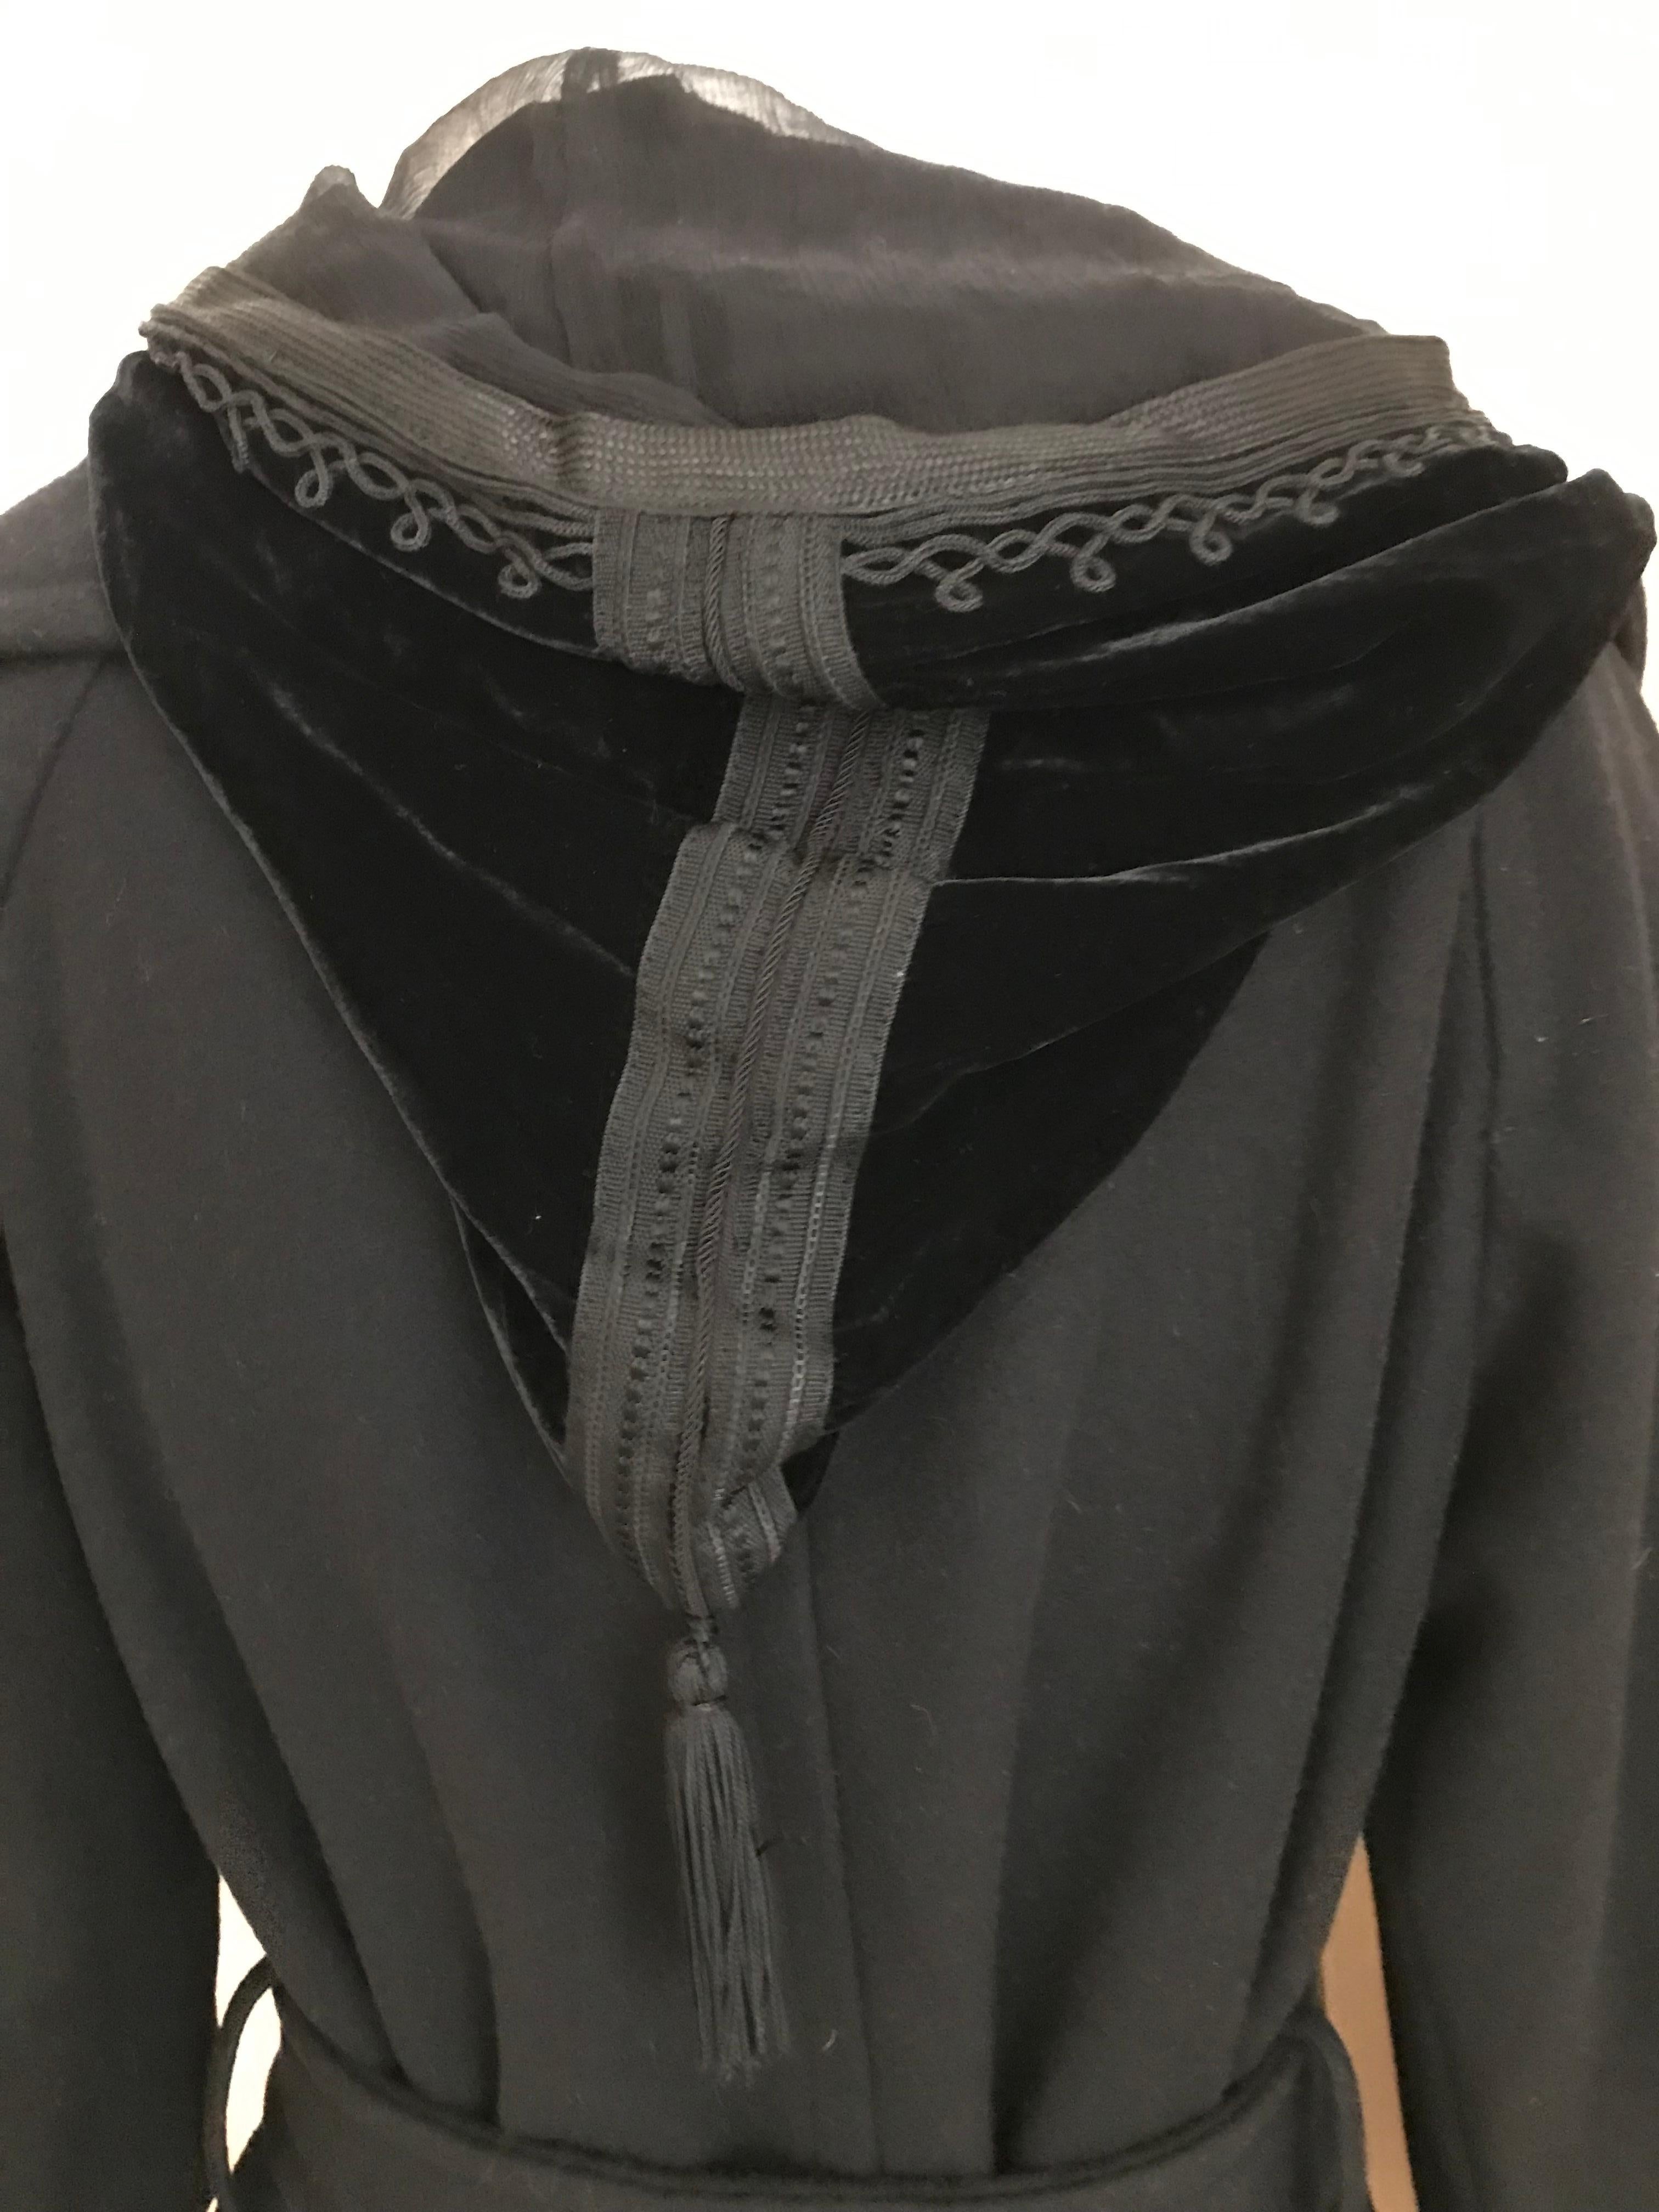 Jean Paul Gaultier Black Wool Coat with Silk Velvet Layer and Hood 7